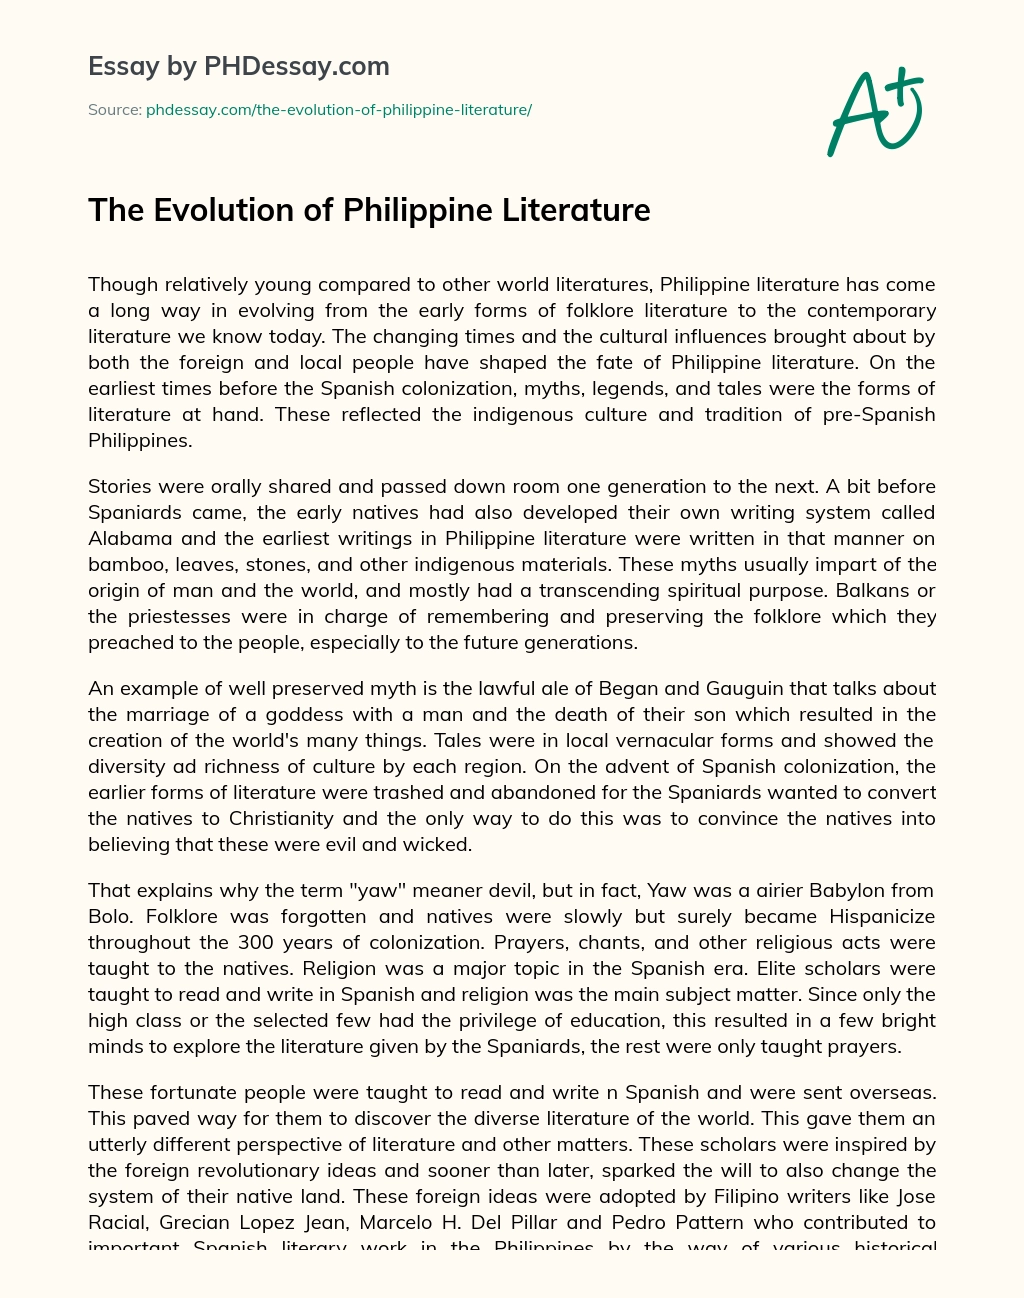 The Evolution of Philippine Literature essay